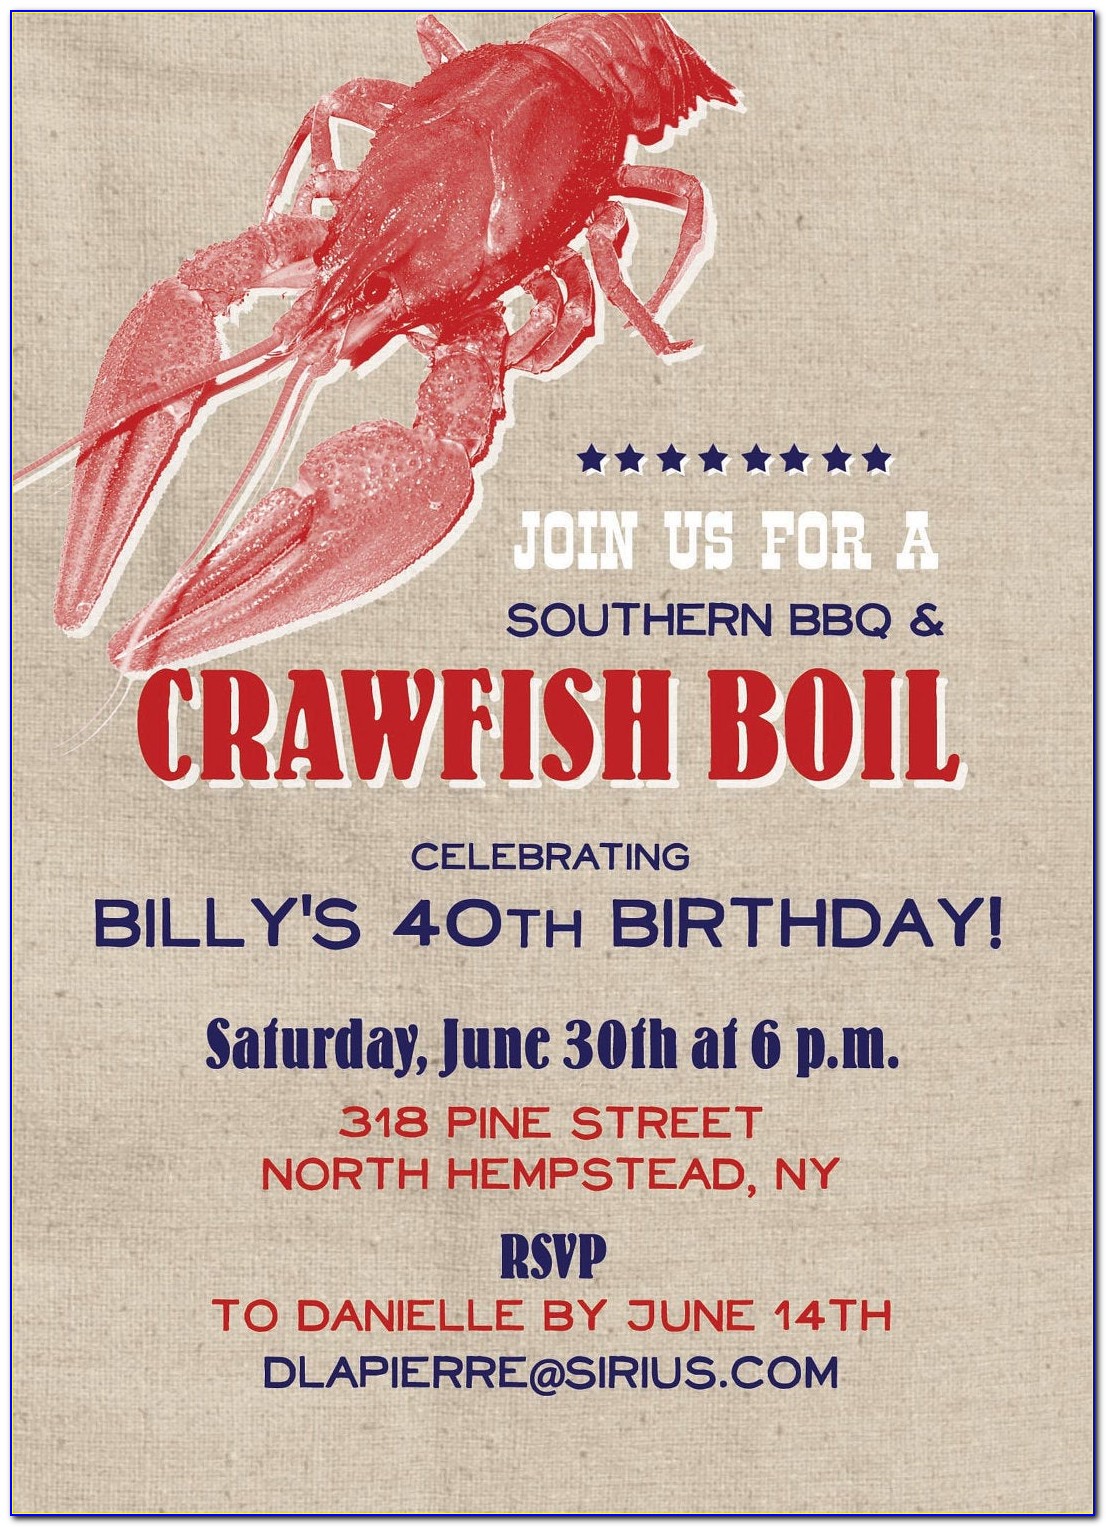 Crawfish Boil Invitations Online